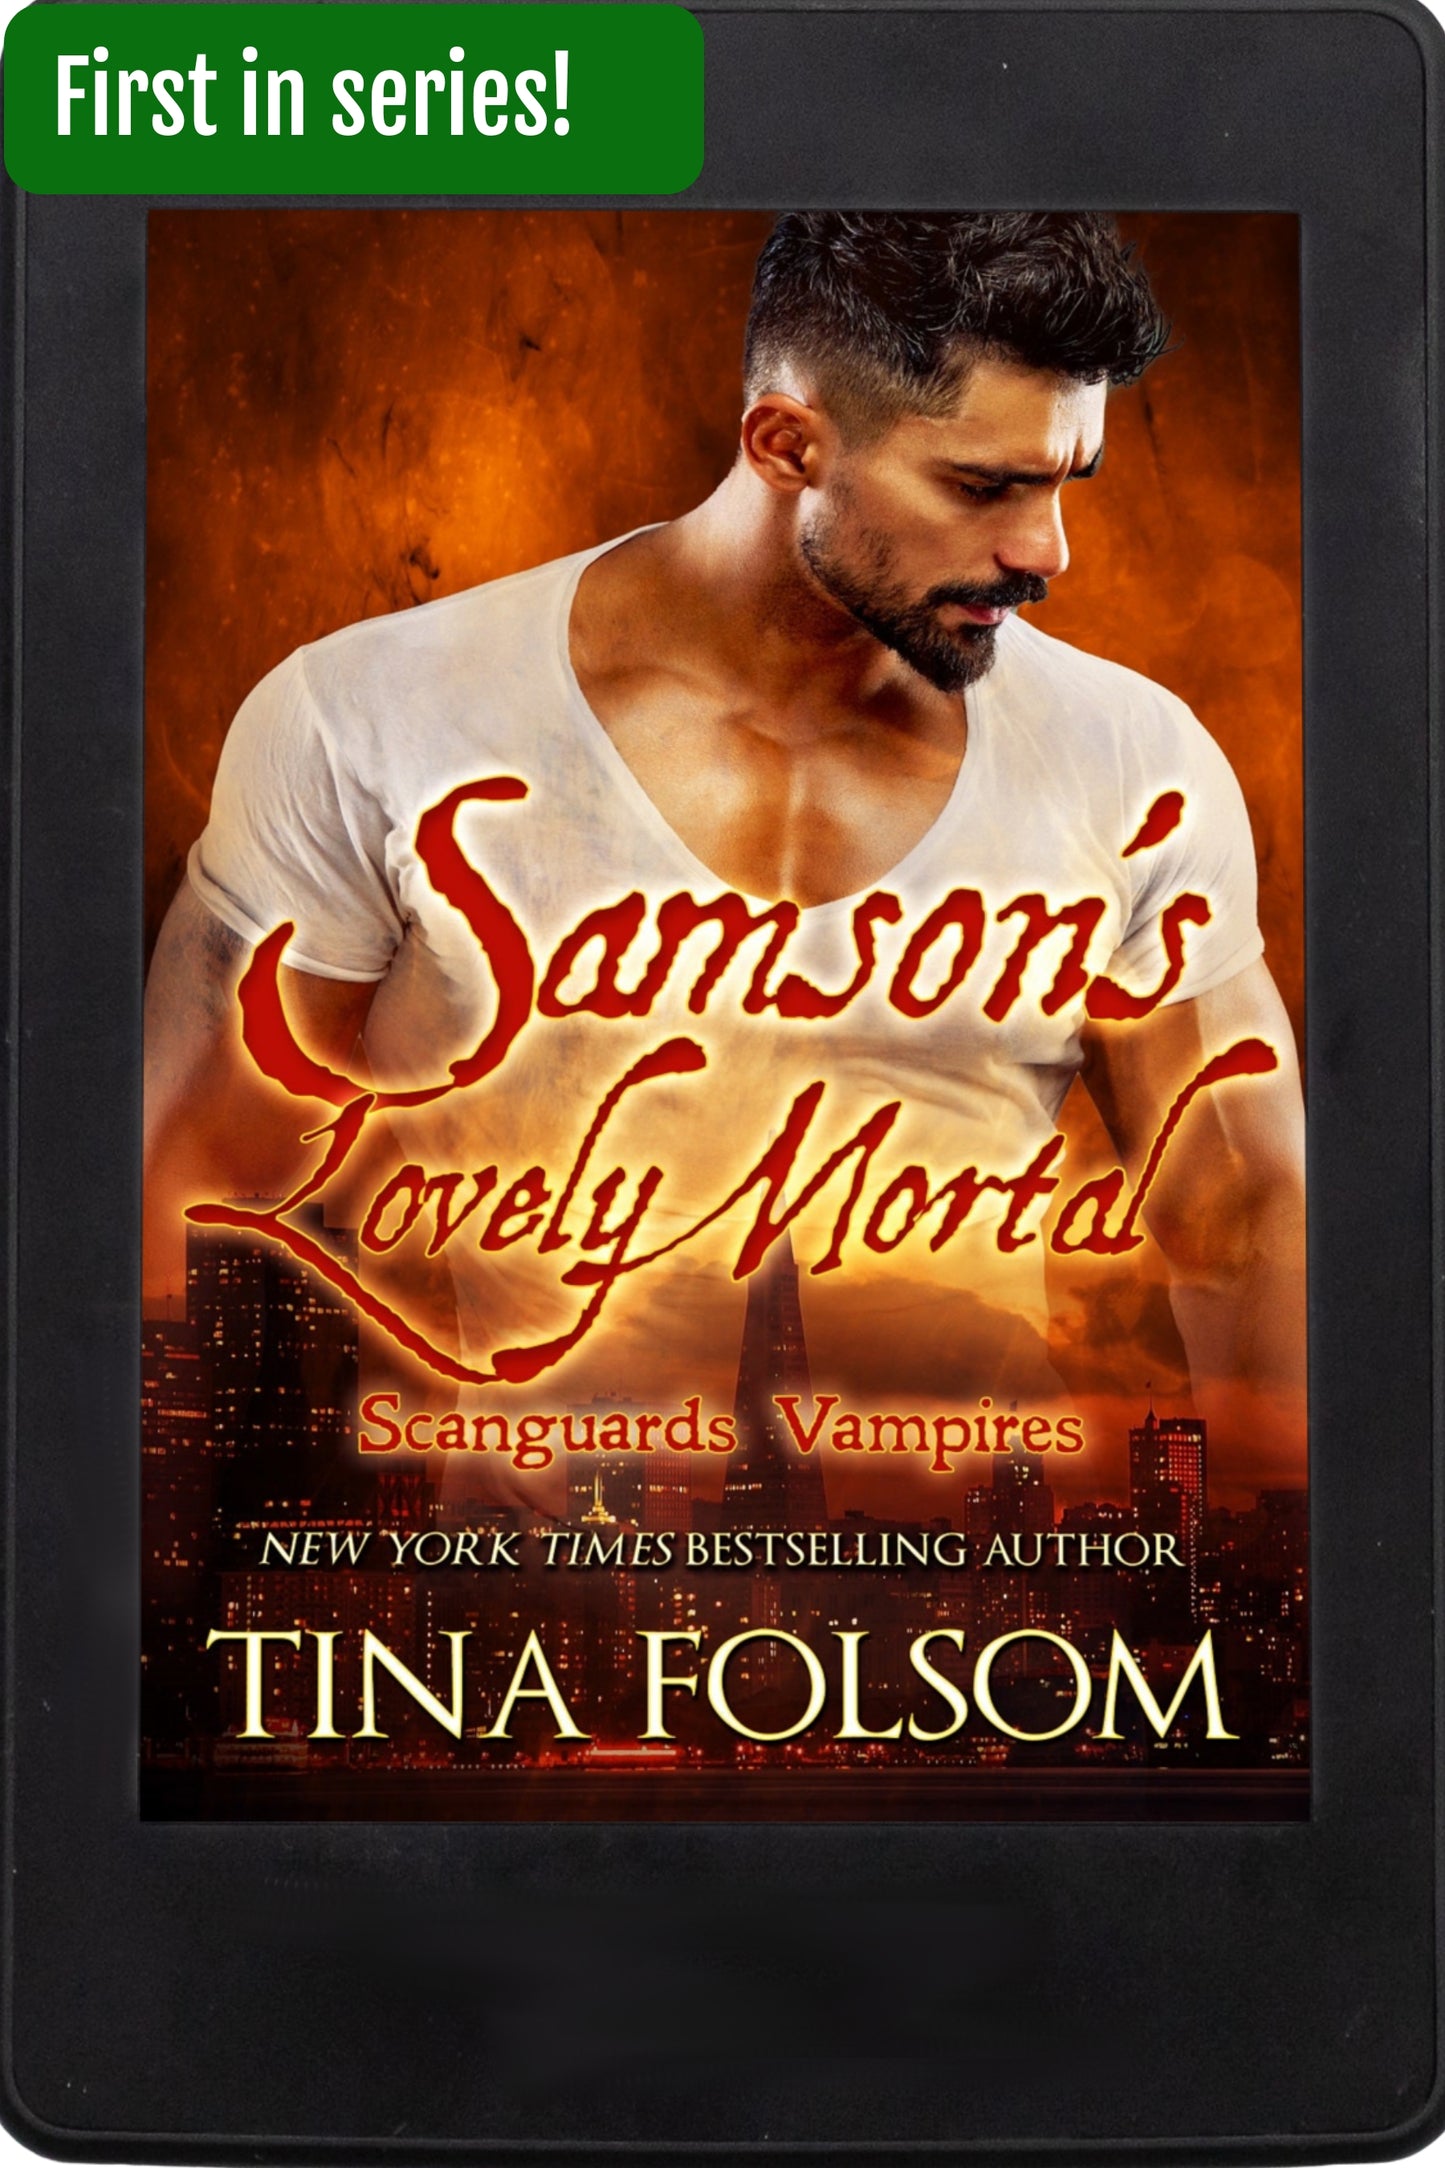 samson's lovely mortal scanguards vampires ebook